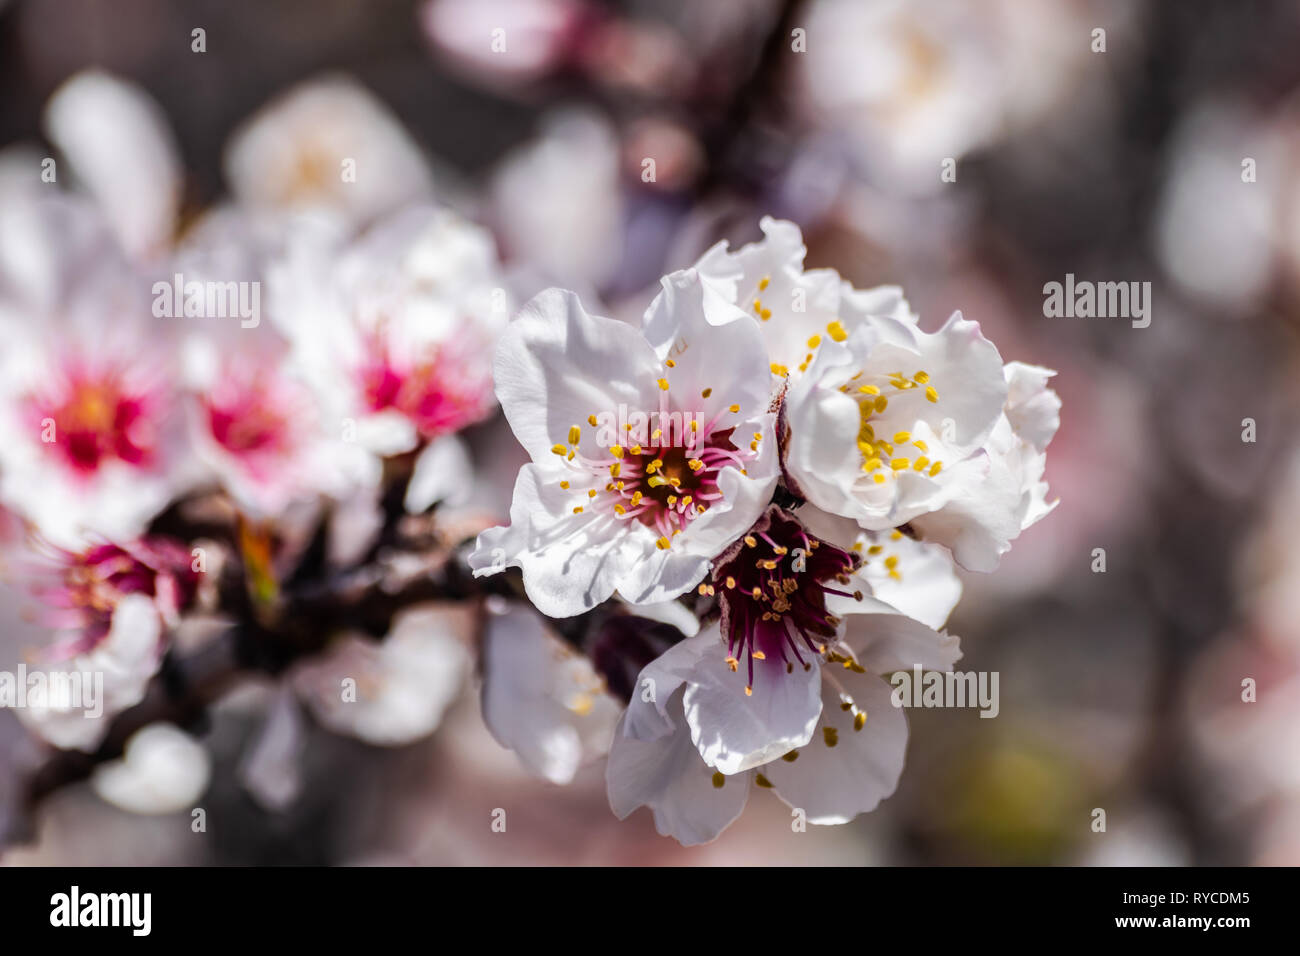 Almond flowers (prunus dulcis) blooming Stock Photo